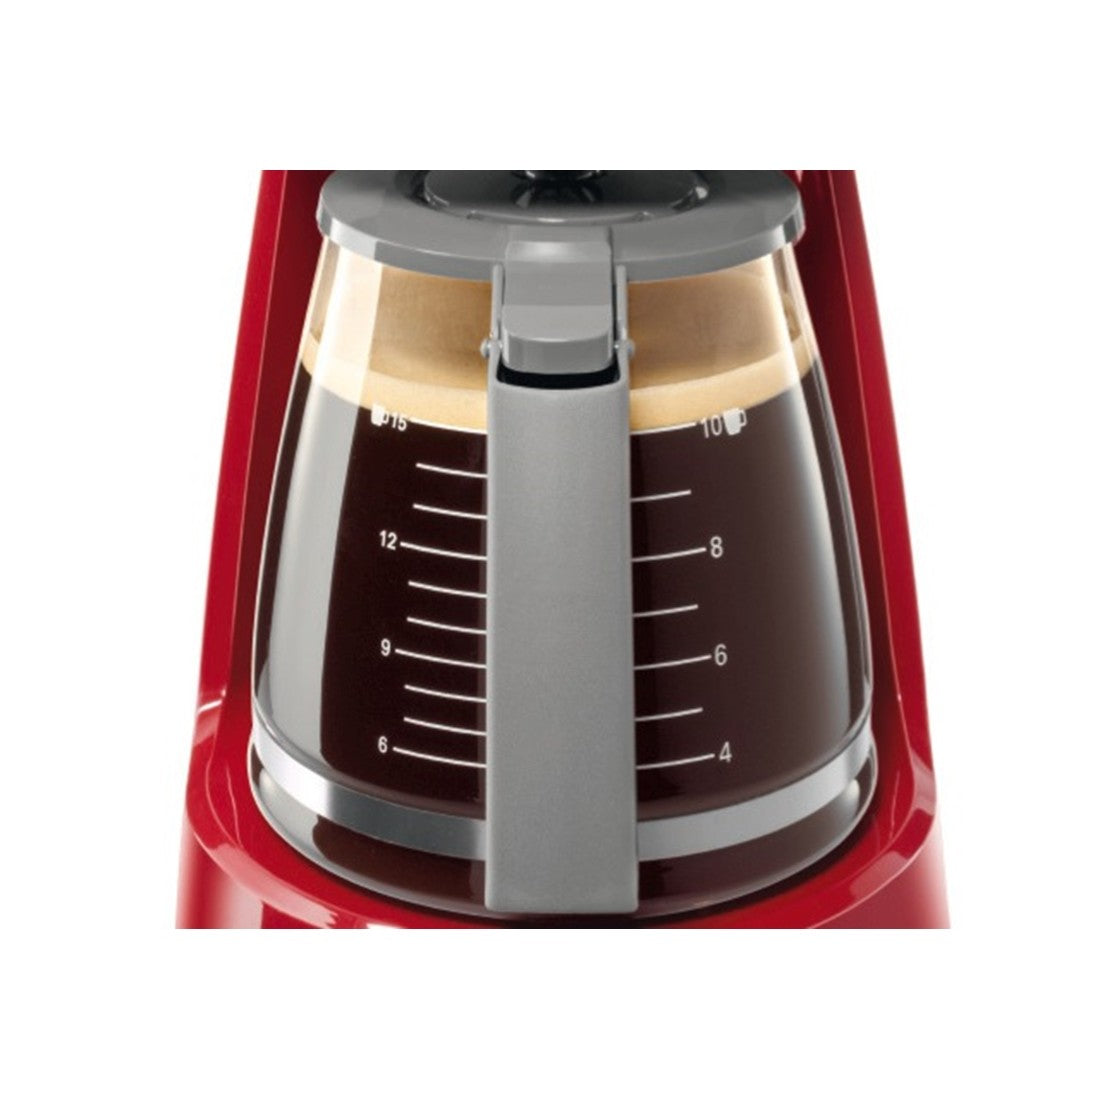 BOSCH Filter Coffee Machine CompactClass Extra TKA3A034 Red/Light gray